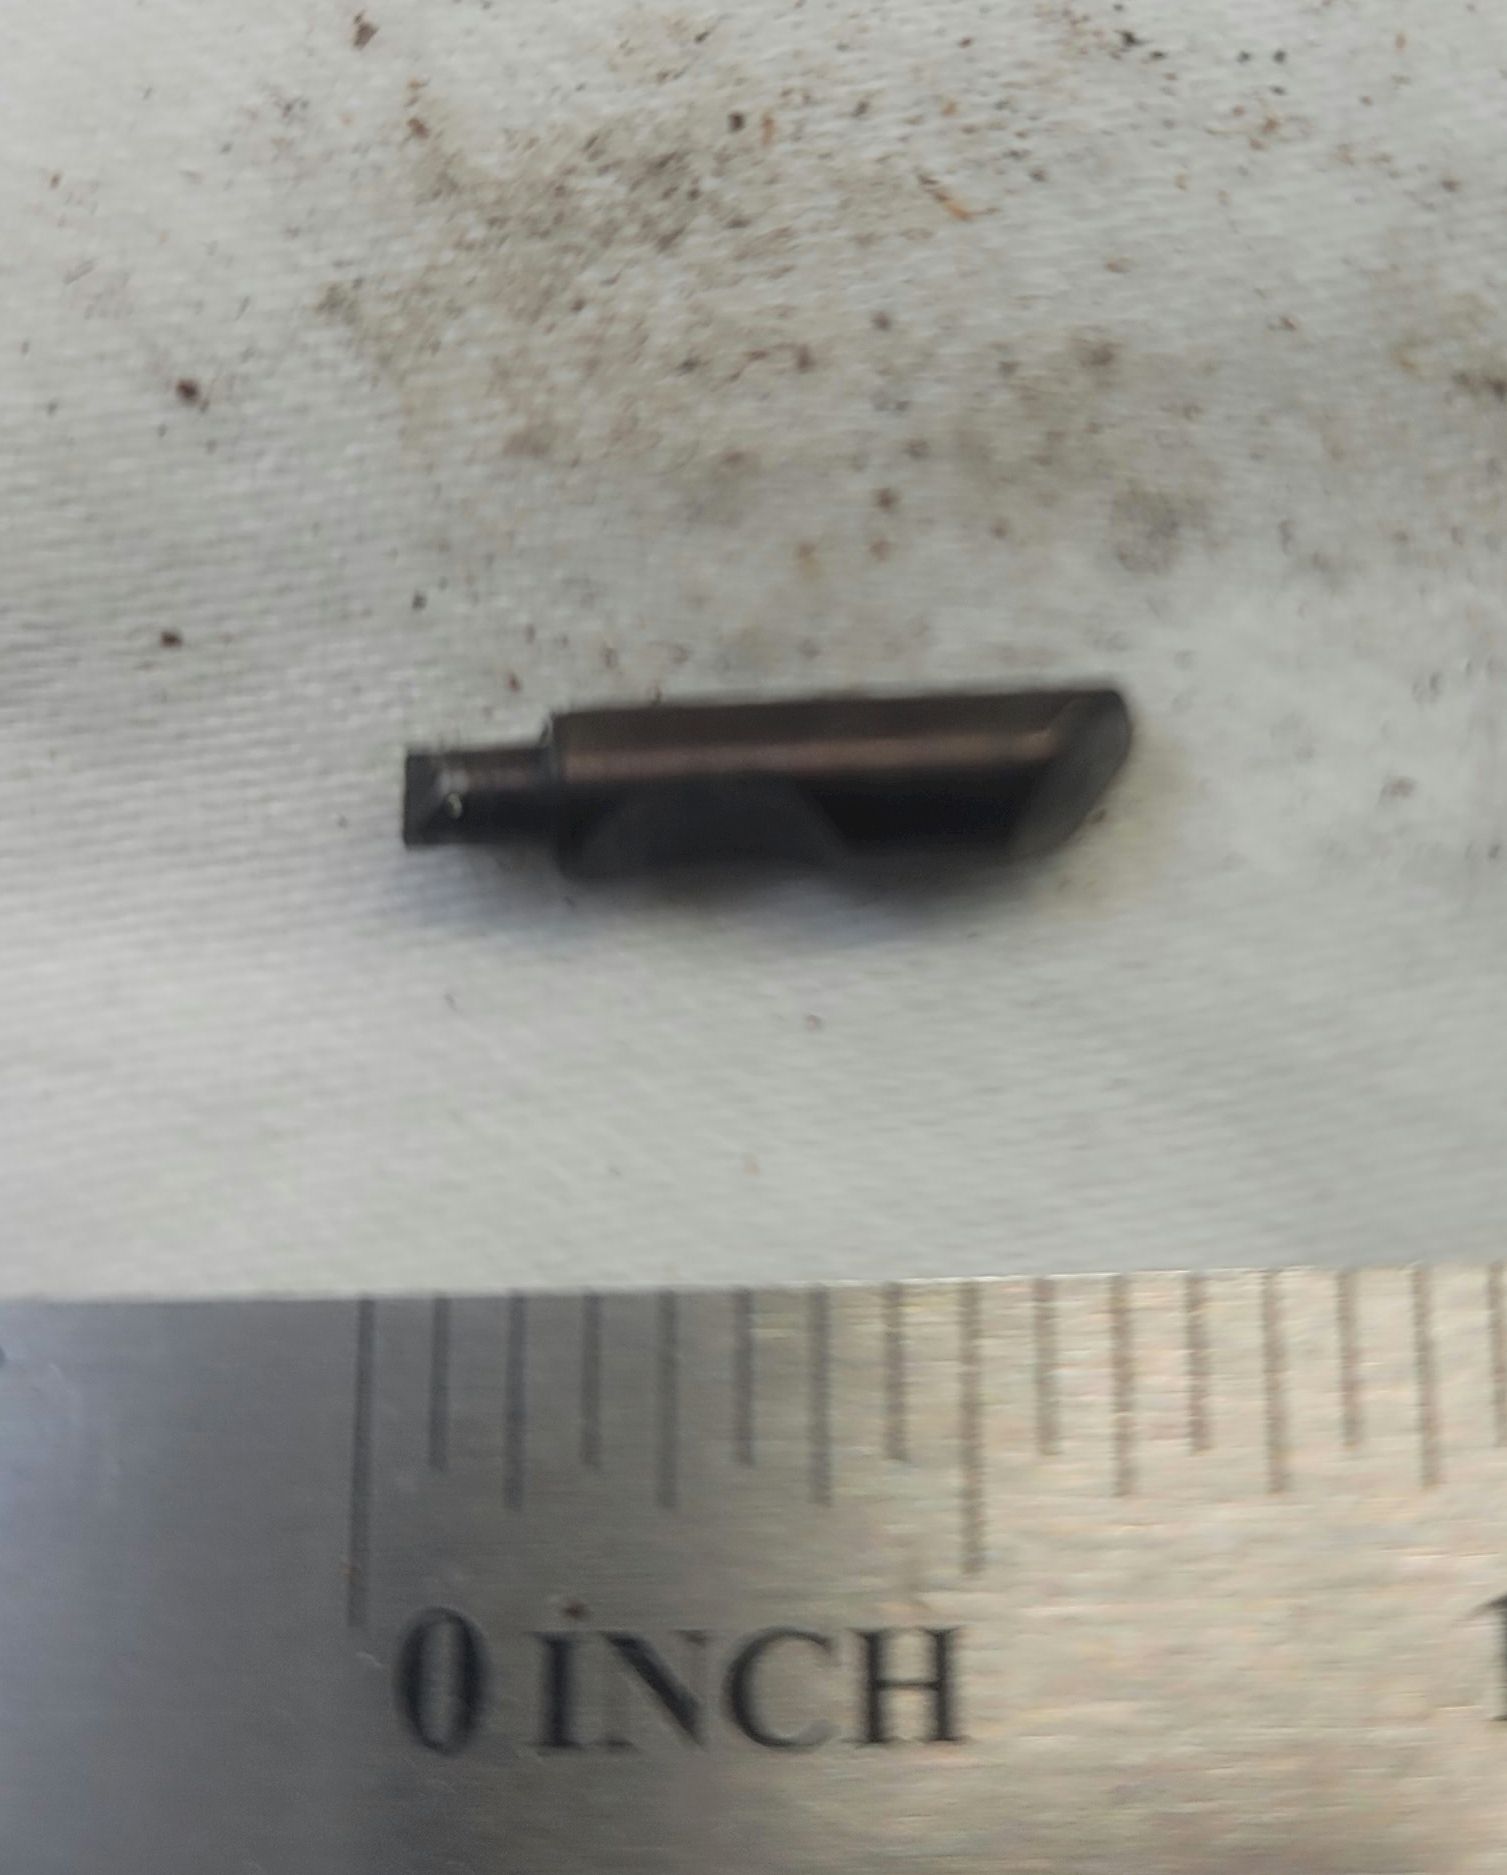 Firing Pin for a Stevens Model 11 Rifle ORIGINAL